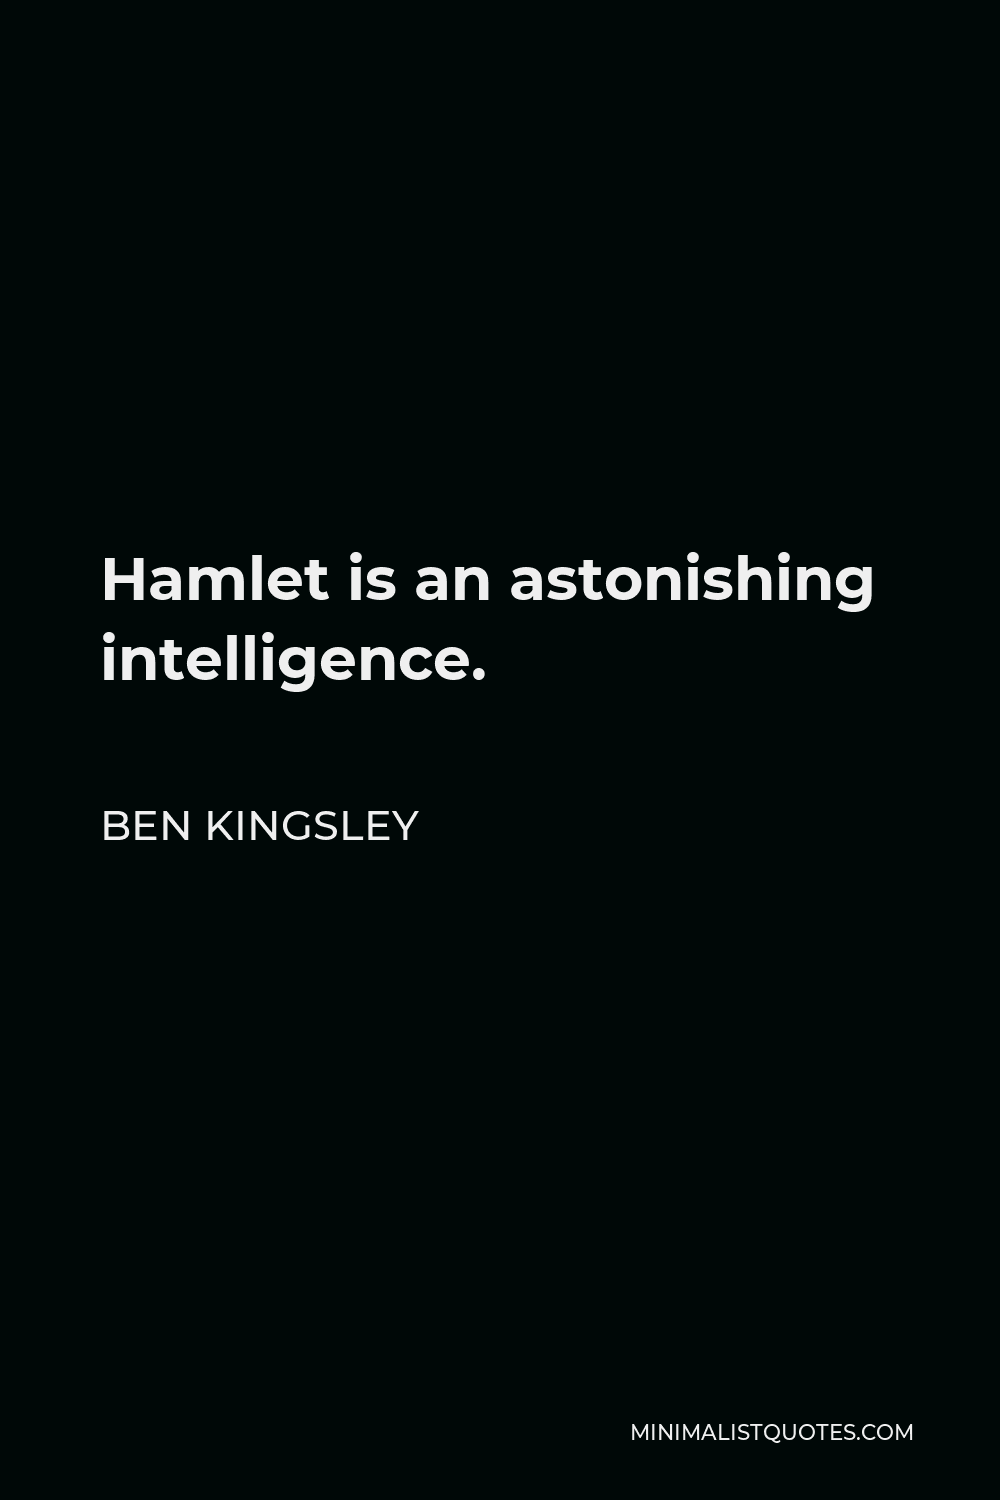 Ben Kingsley Quote - Hamlet is an astonishing intelligence.